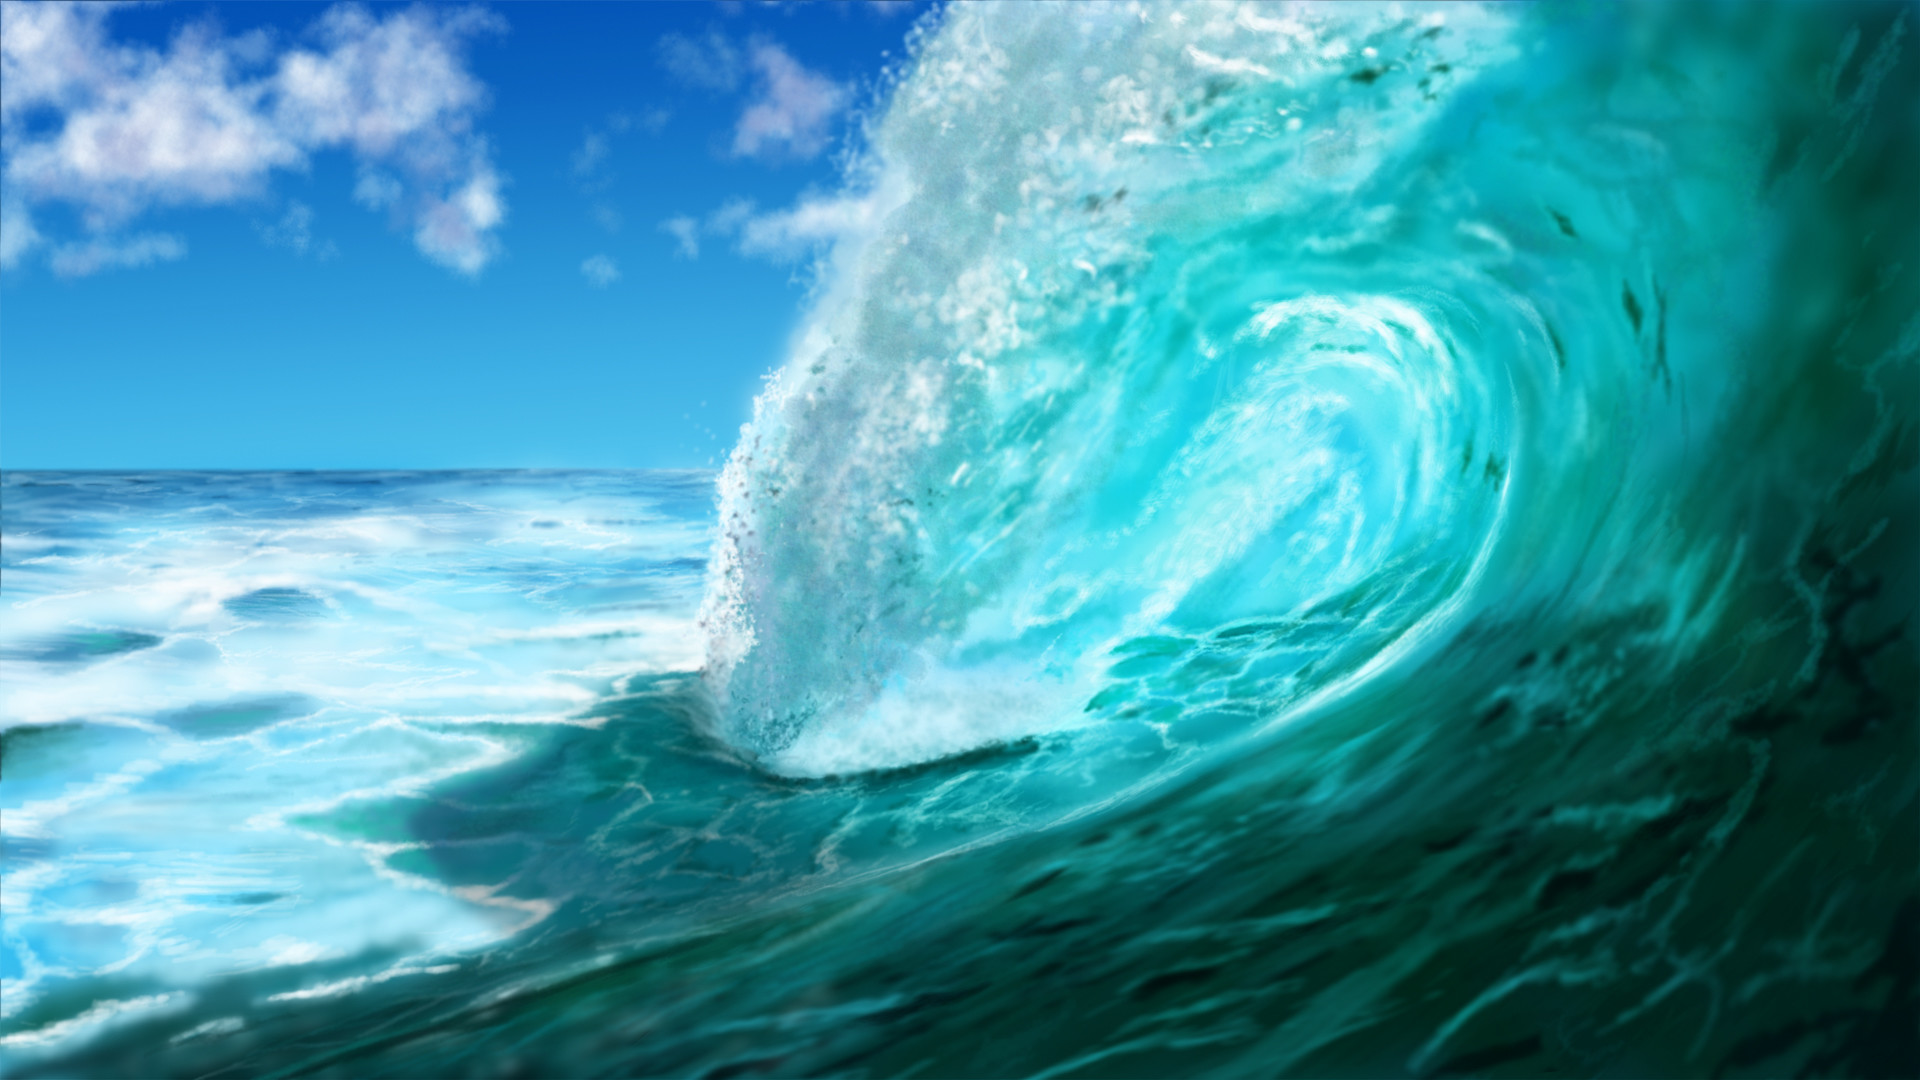 painted Wallpaper – Ocean Wave (Meereswoge, Welle by dasflon on .